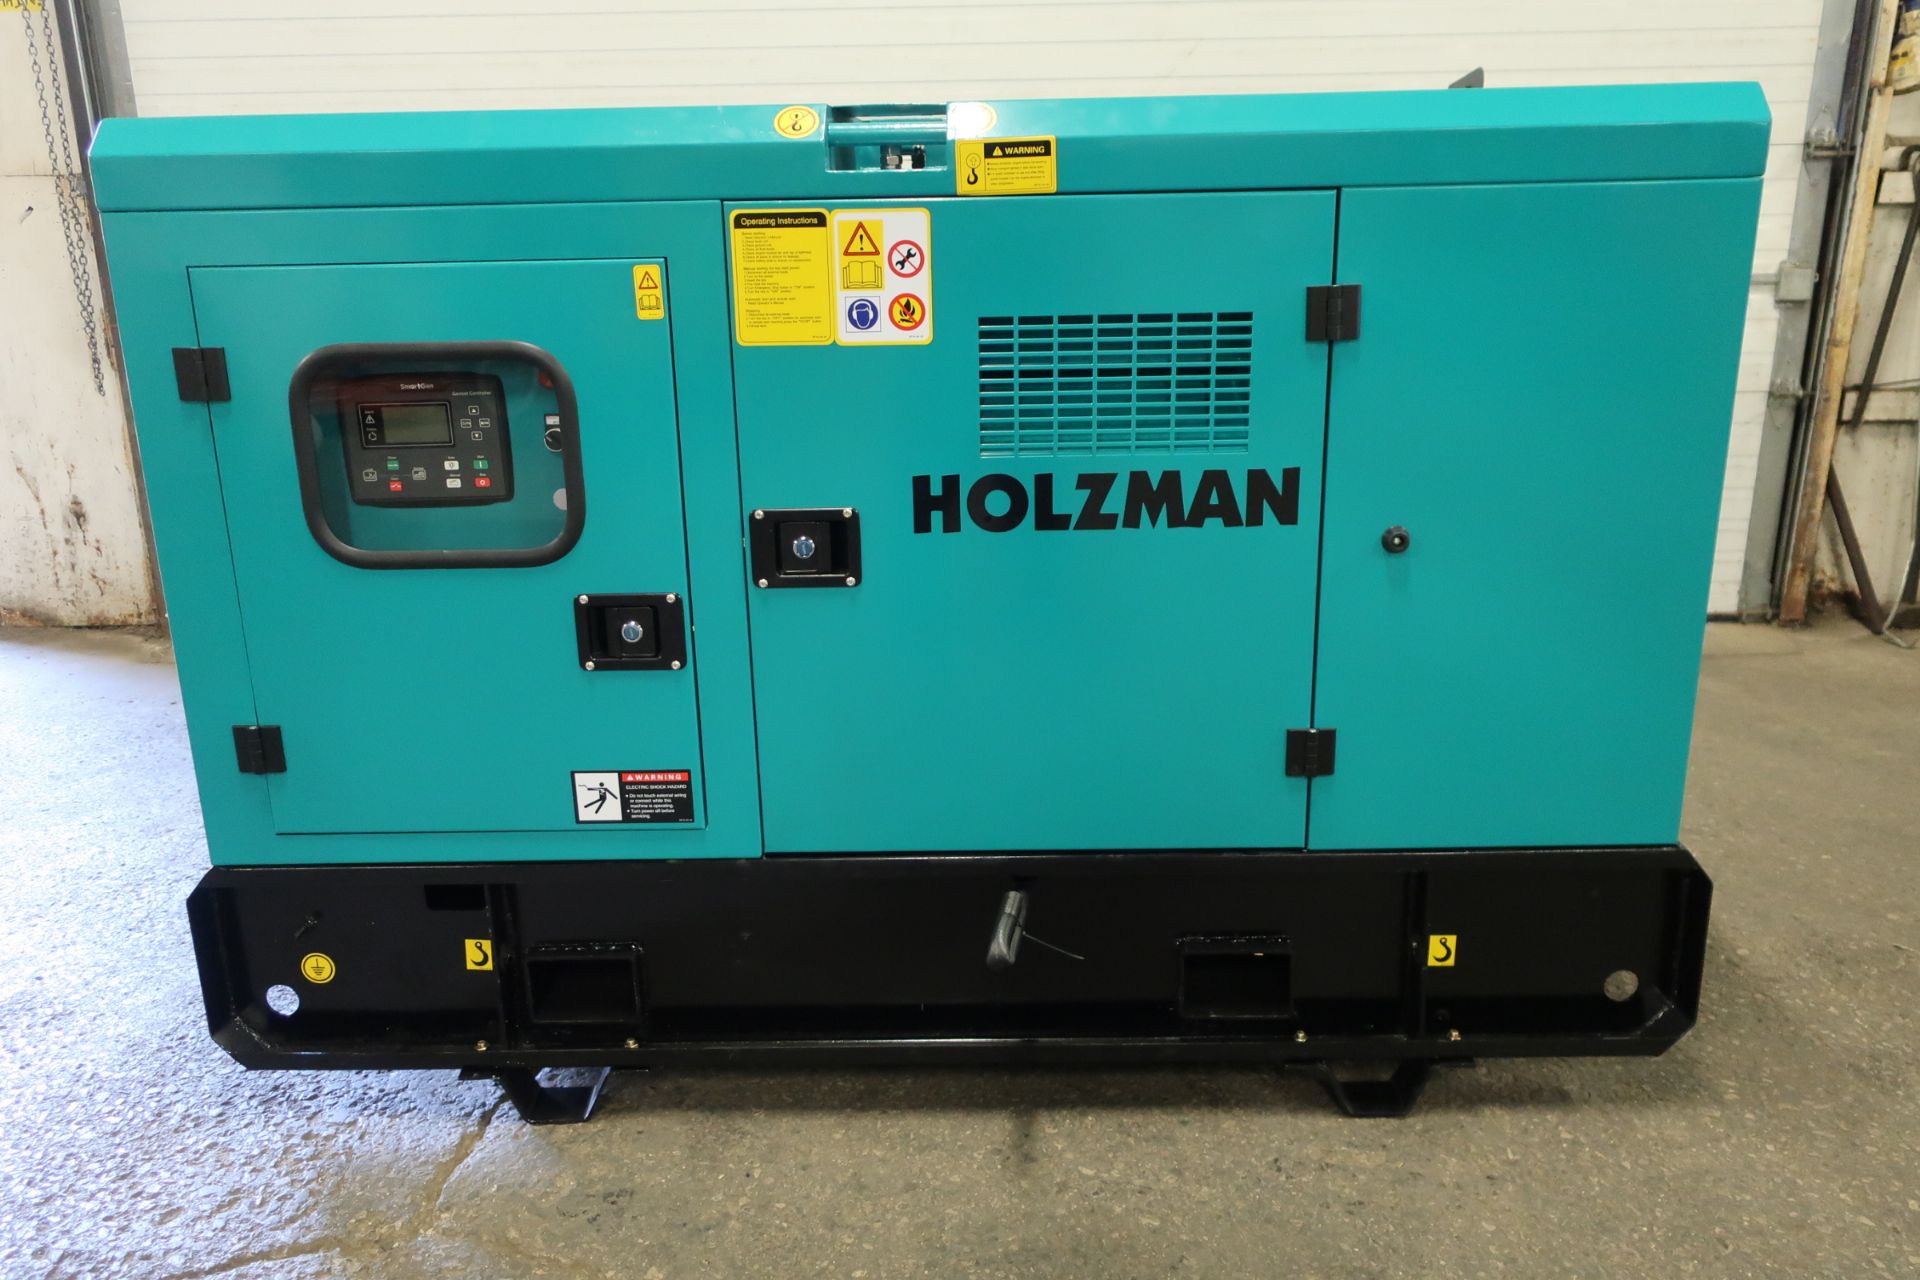 NEW Holzman PowerGen Diesel Generator with Smartgen Controller - 15 KW / 15 KVA - 220V 49 amp